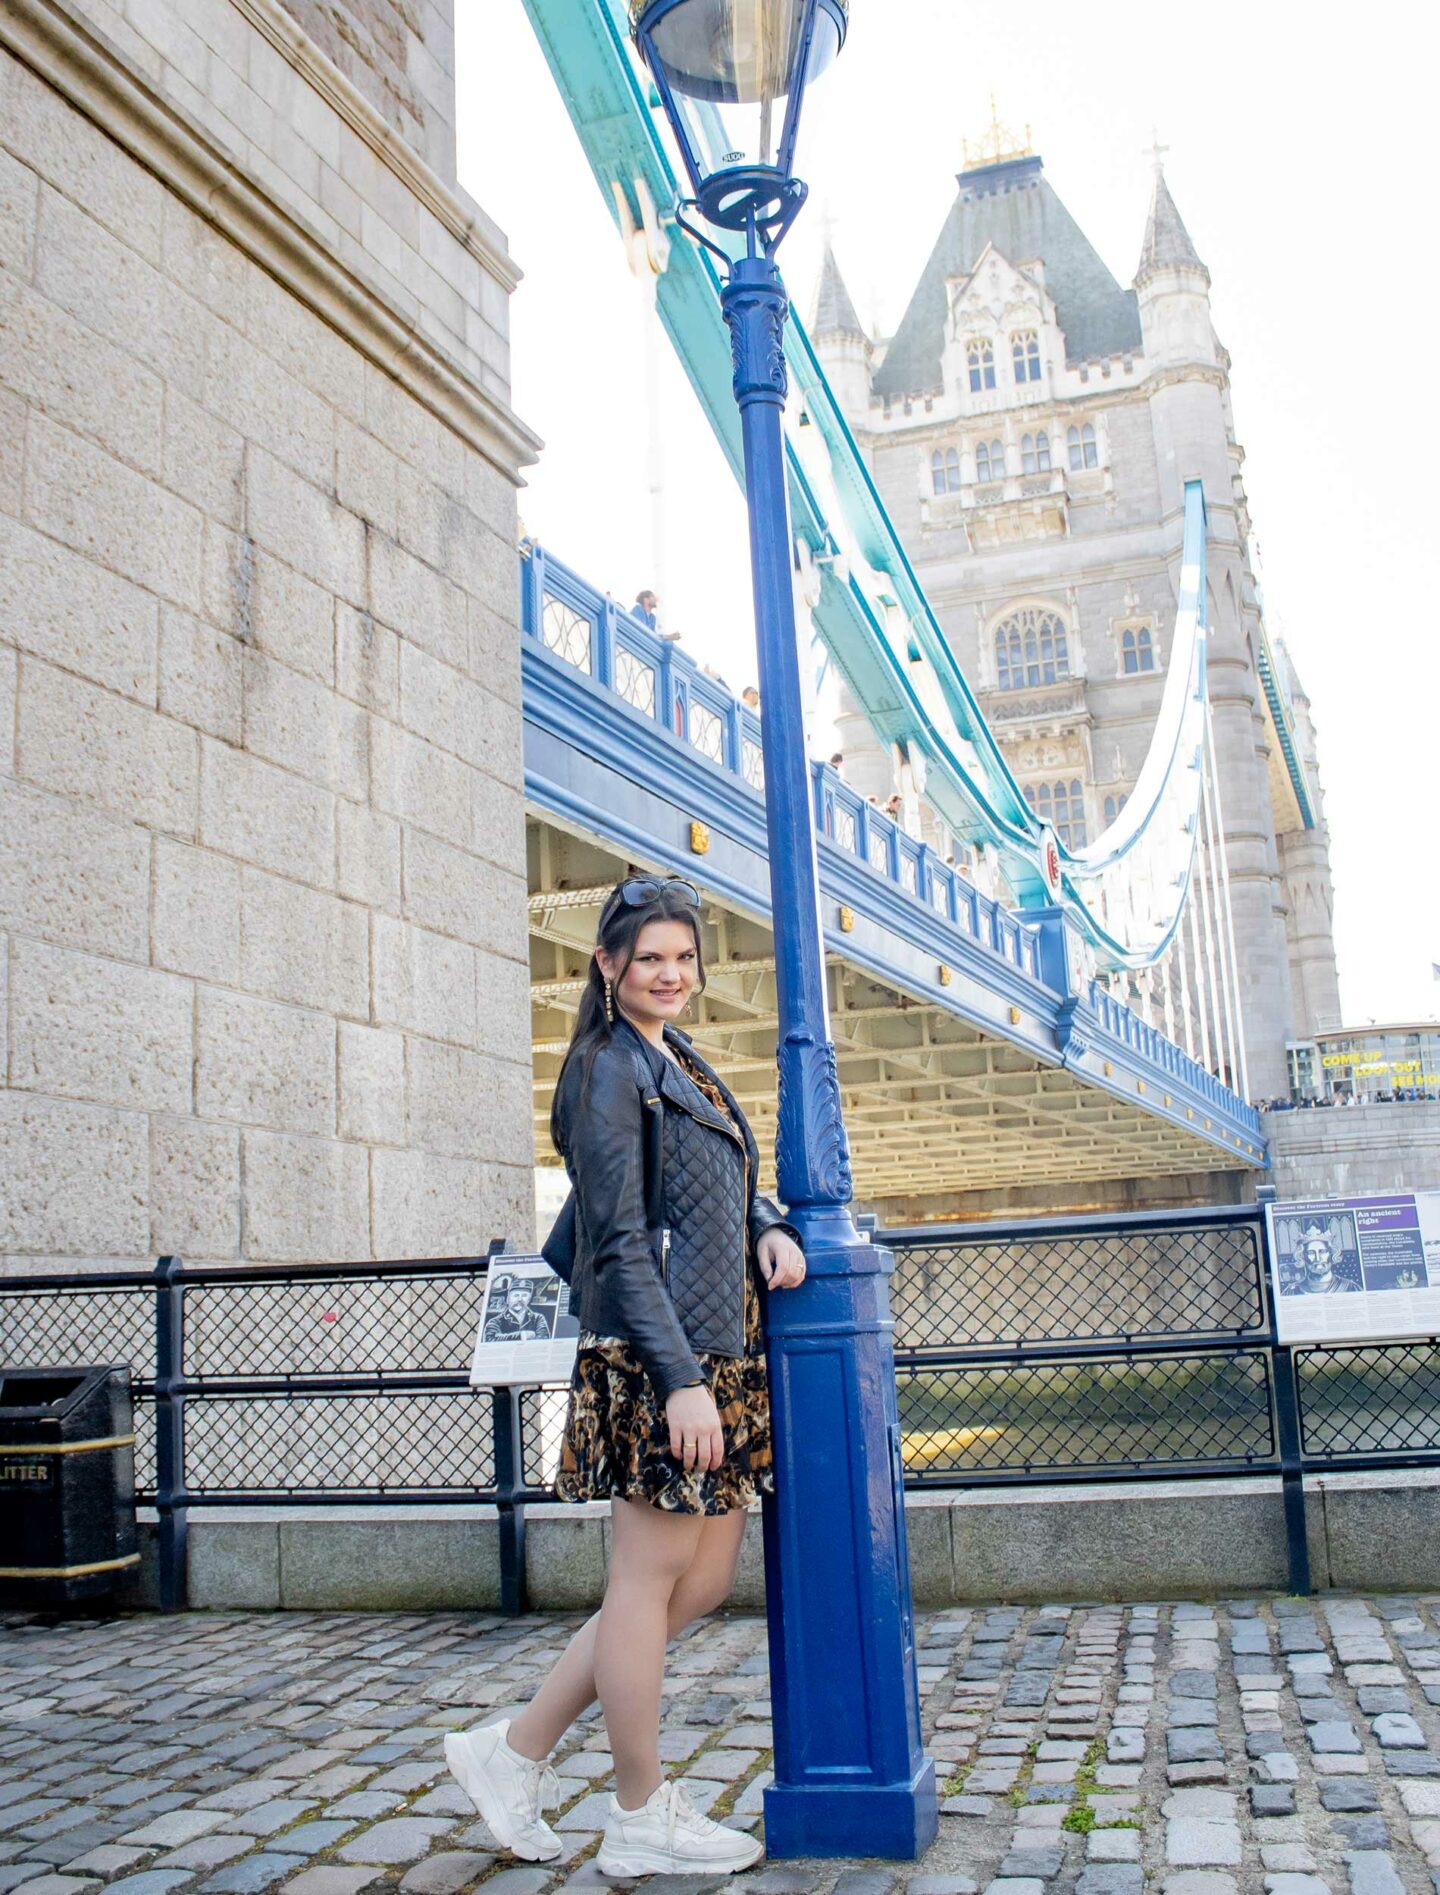 Tower Bridger als bekannter Fotospot in London